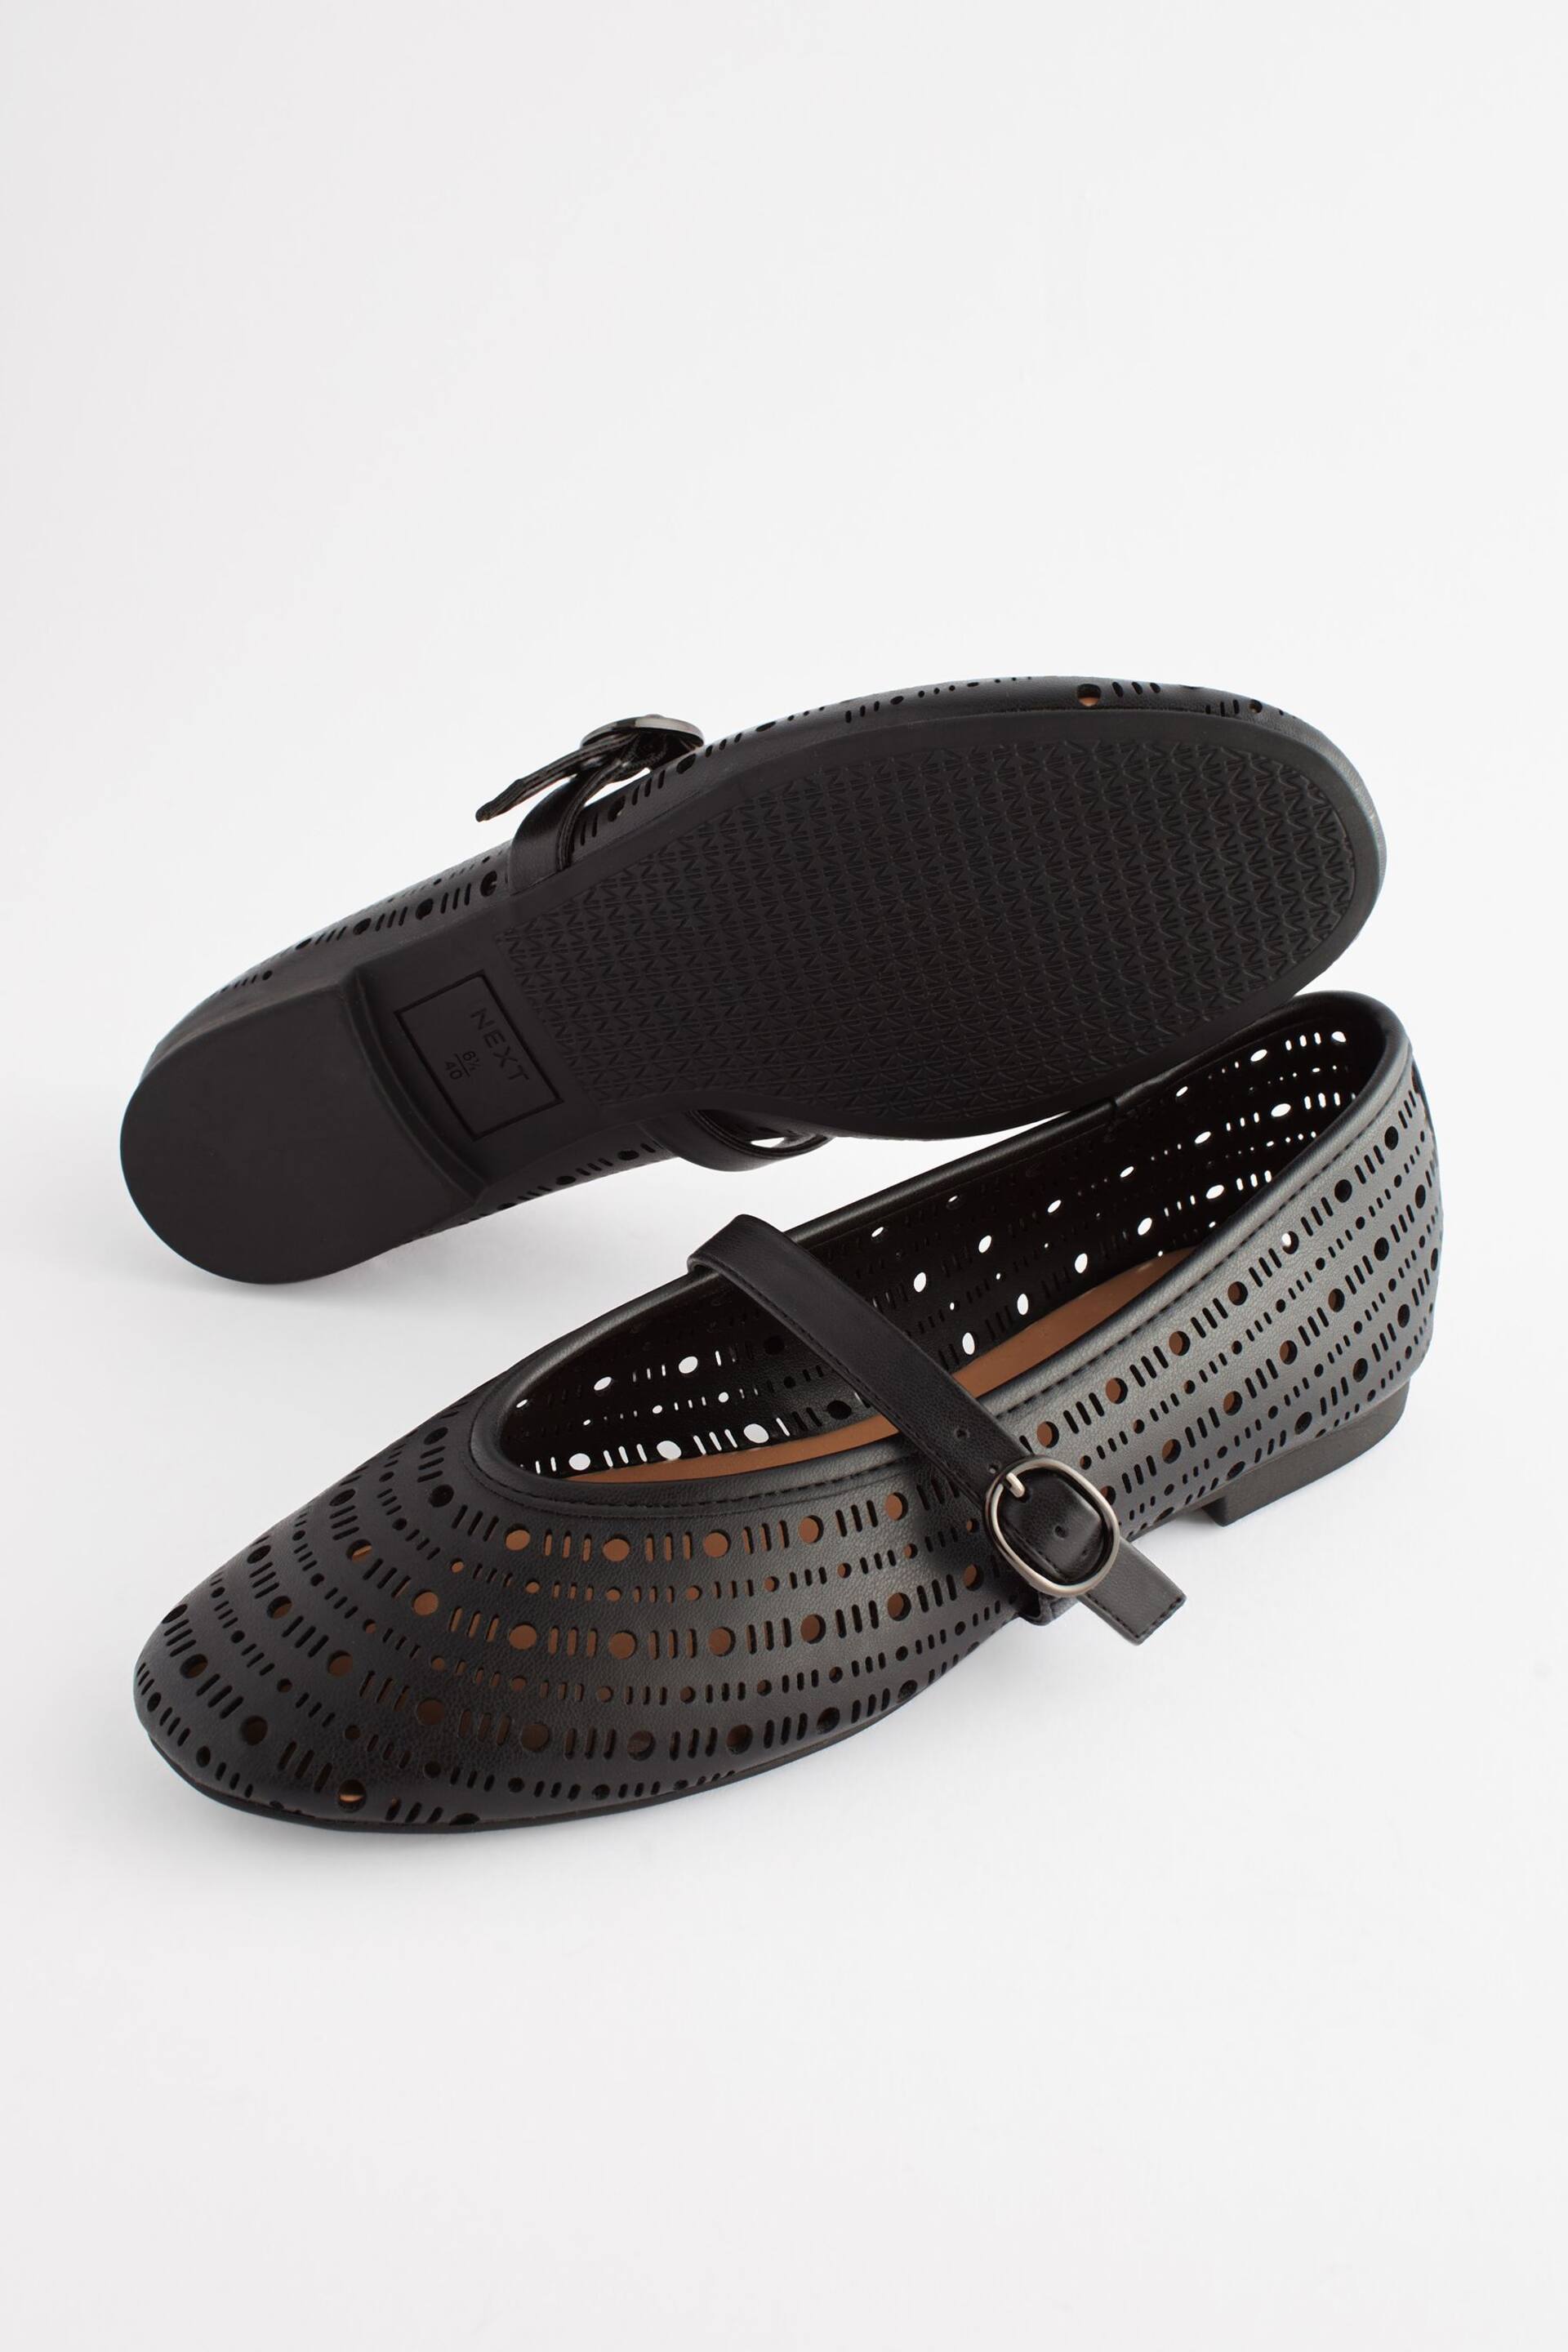 Black Forever Comfort® Lasercut Mary Jane Shoes - Image 3 of 5